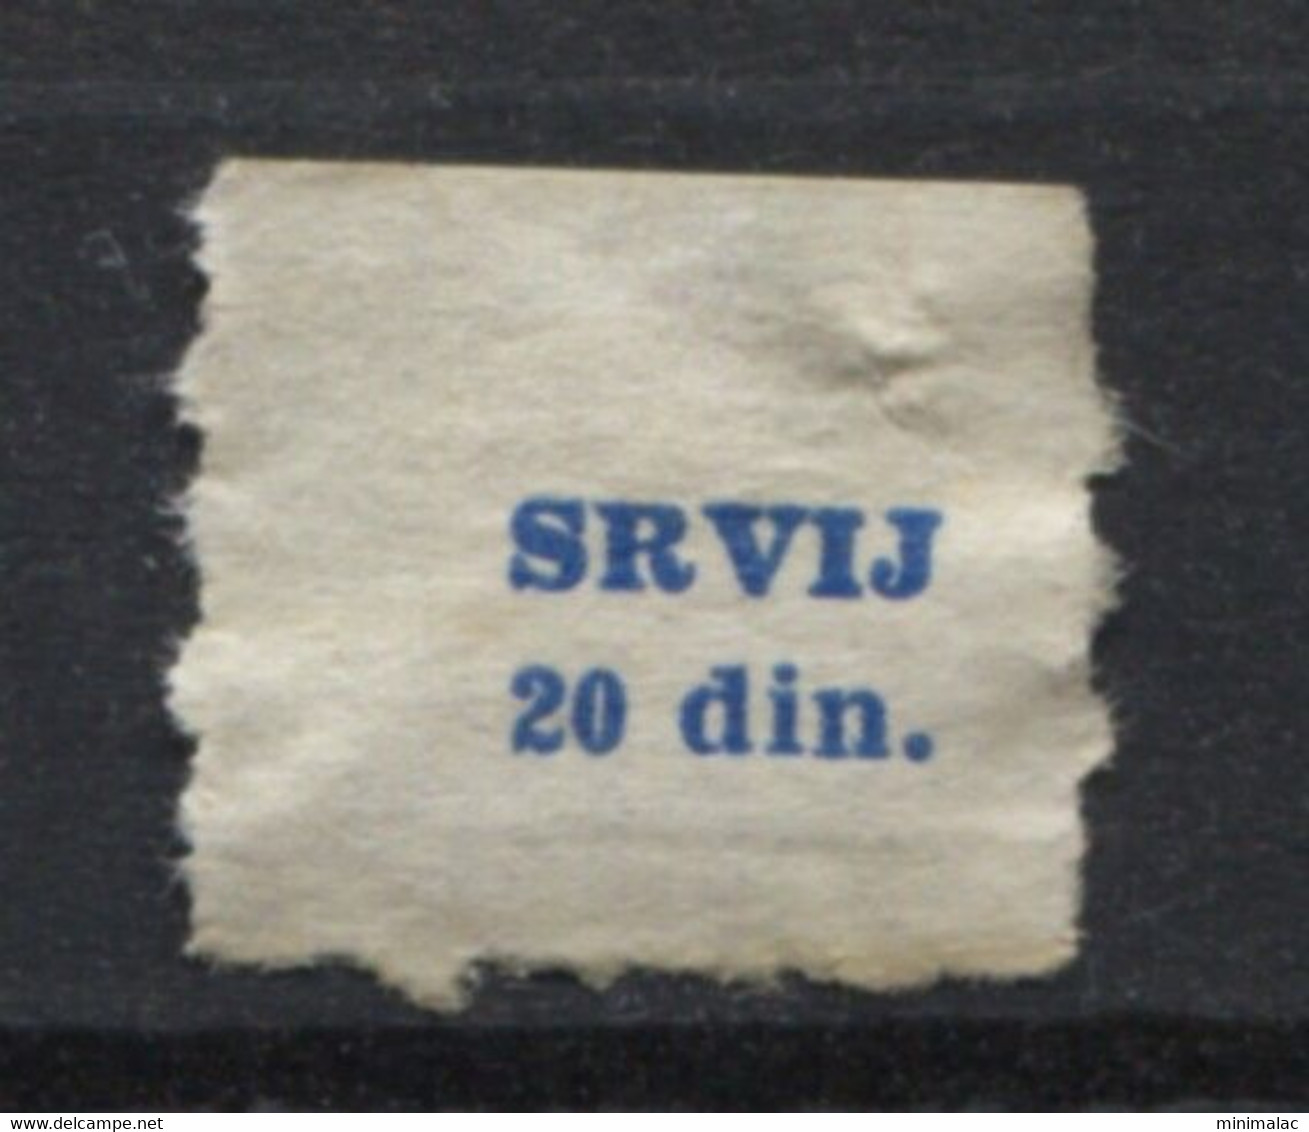 Yugoslavia 1961, Stamp For Membership, SRVIJ, Labor Union, Administrative Stamp - Revenue, Tax Stamp, 20d LATIN LETTERS - Dienstzegels